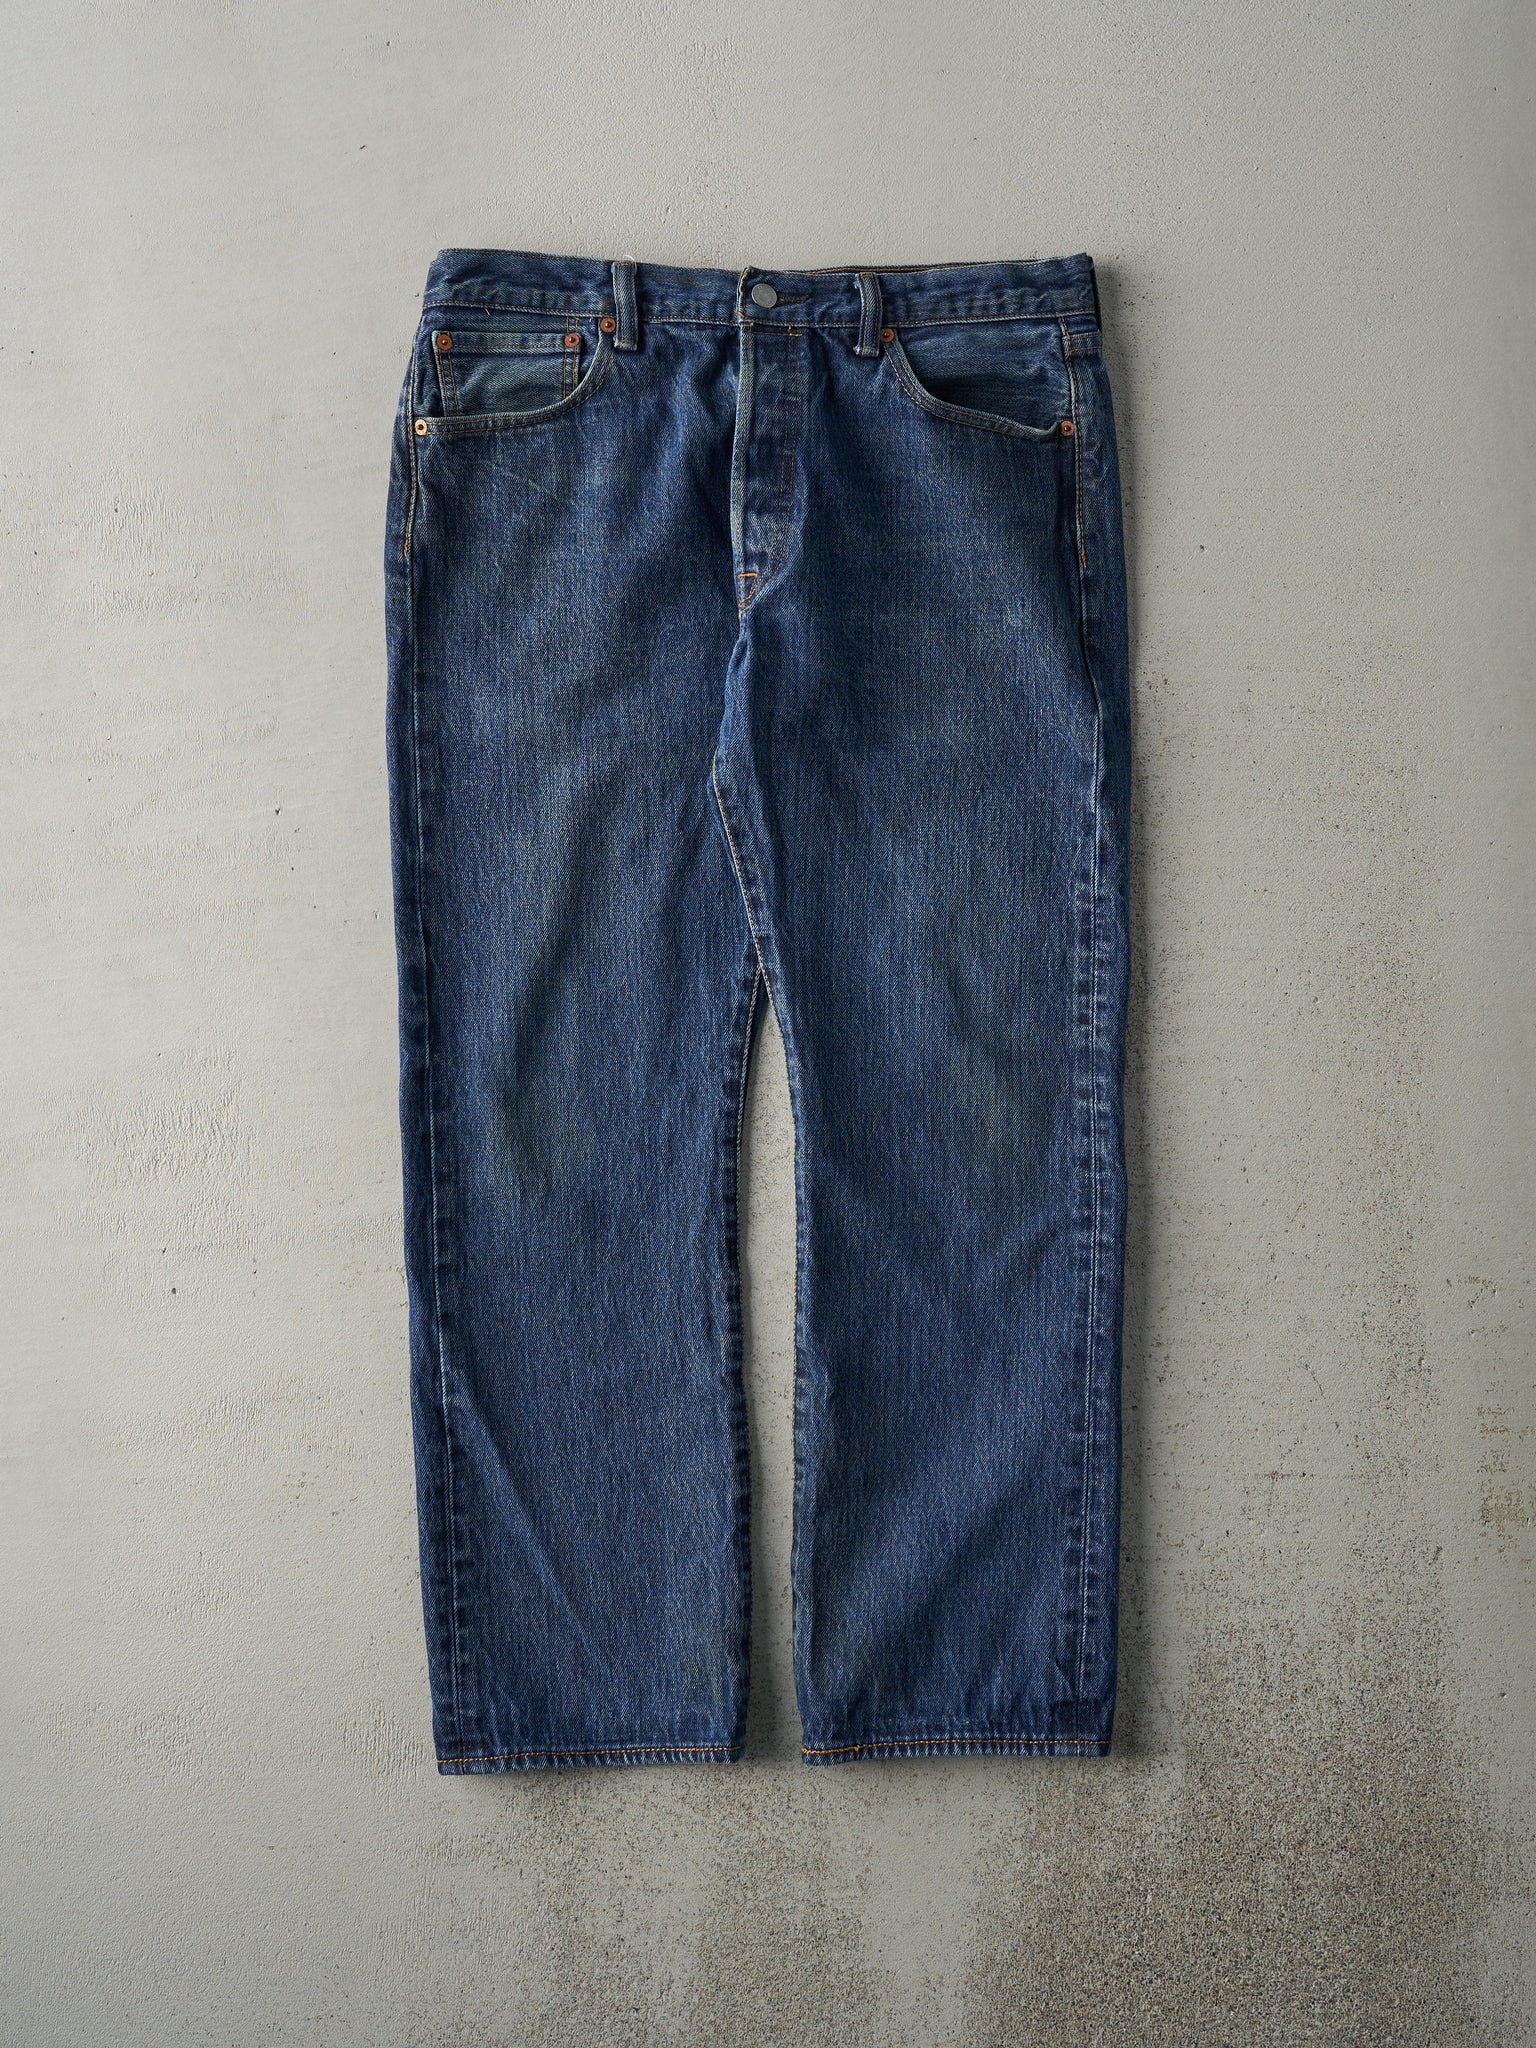 Vintage Y2K Dark Wash Levi's 501 Jeans (34x27.5)